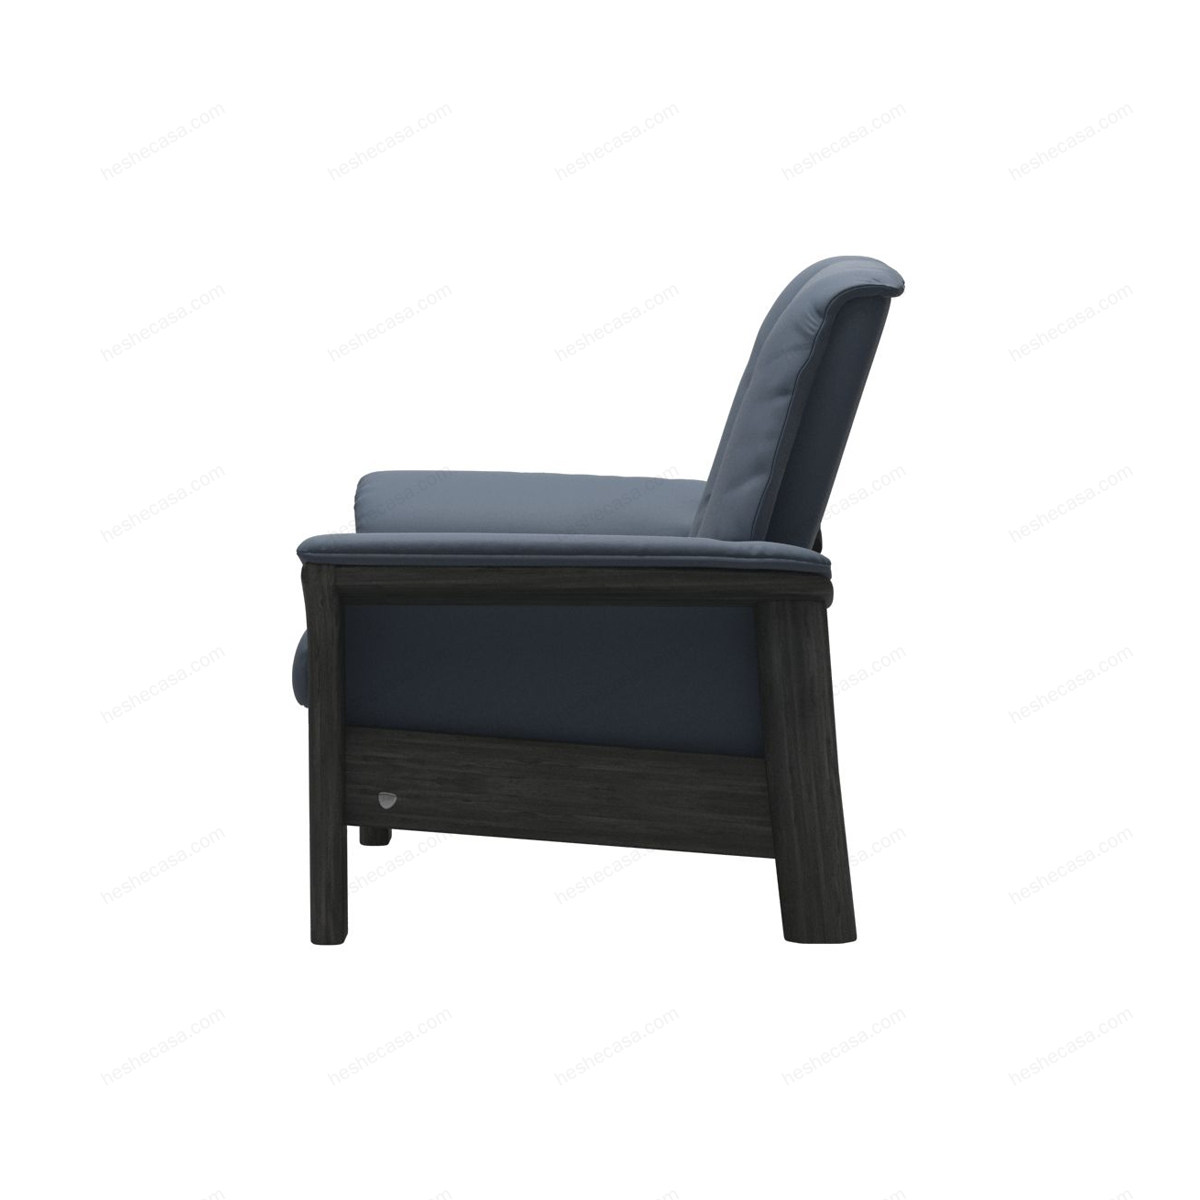 Buckingham Chair Low Back扶手椅